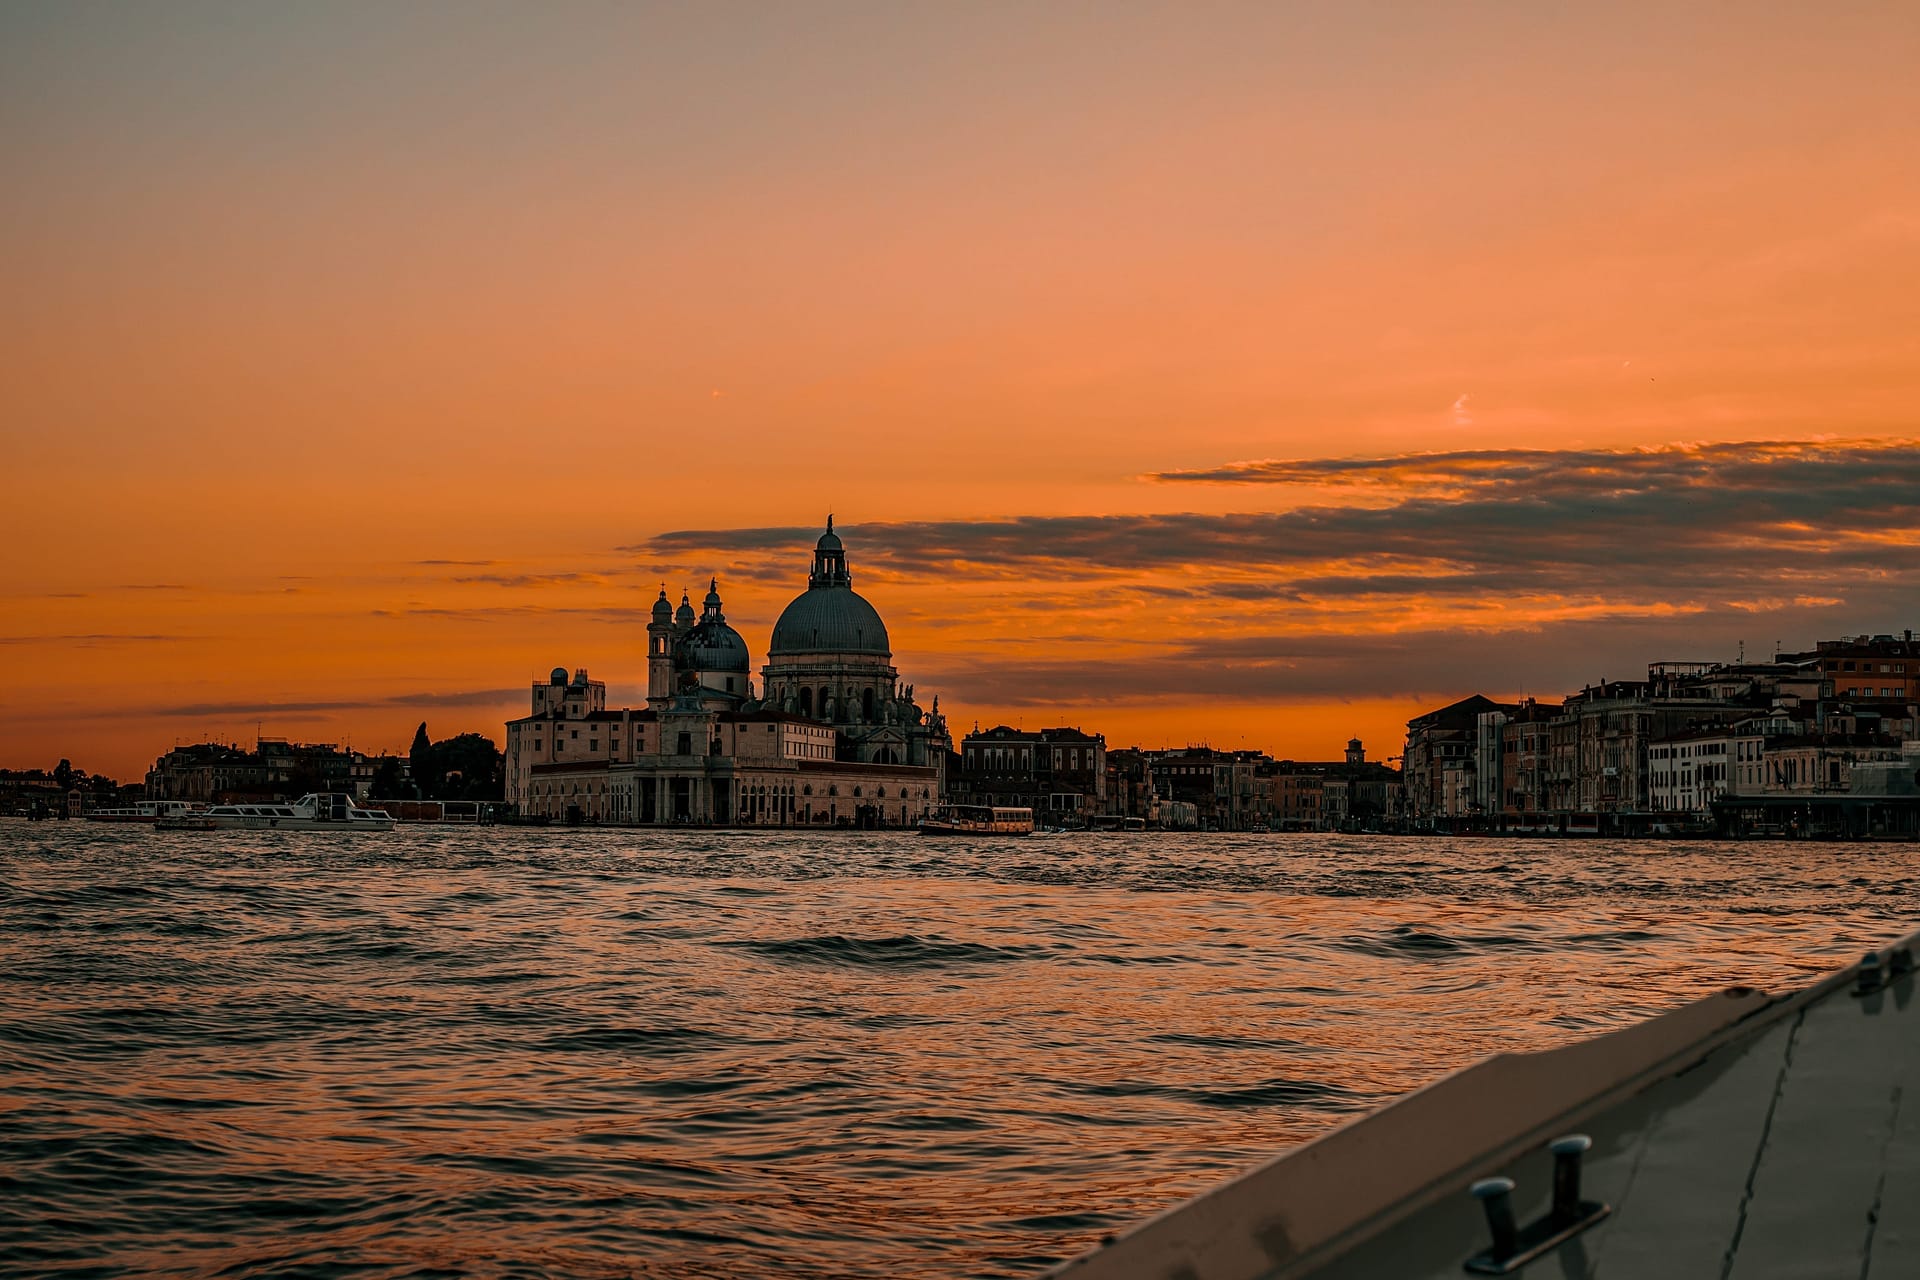 Venice sunset by Senten-Images